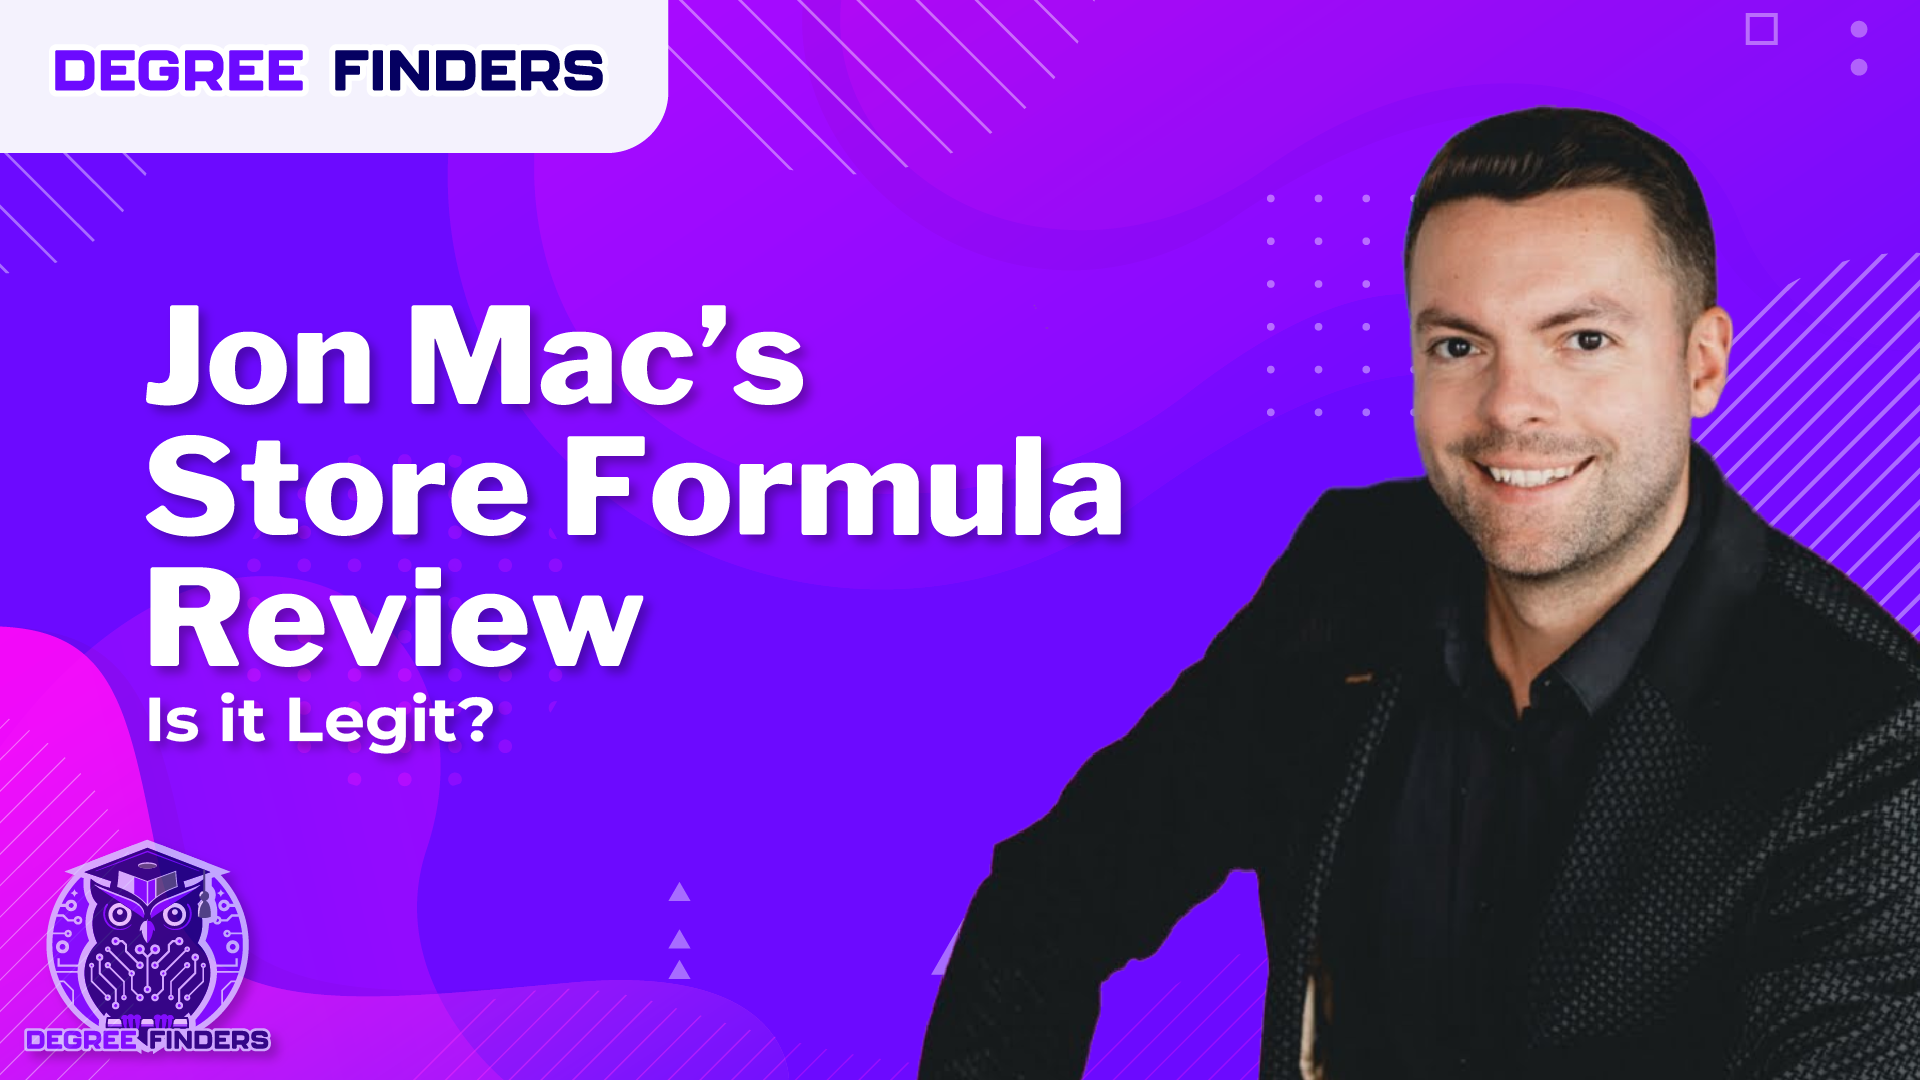 Jon Mac’s Store Formula Review